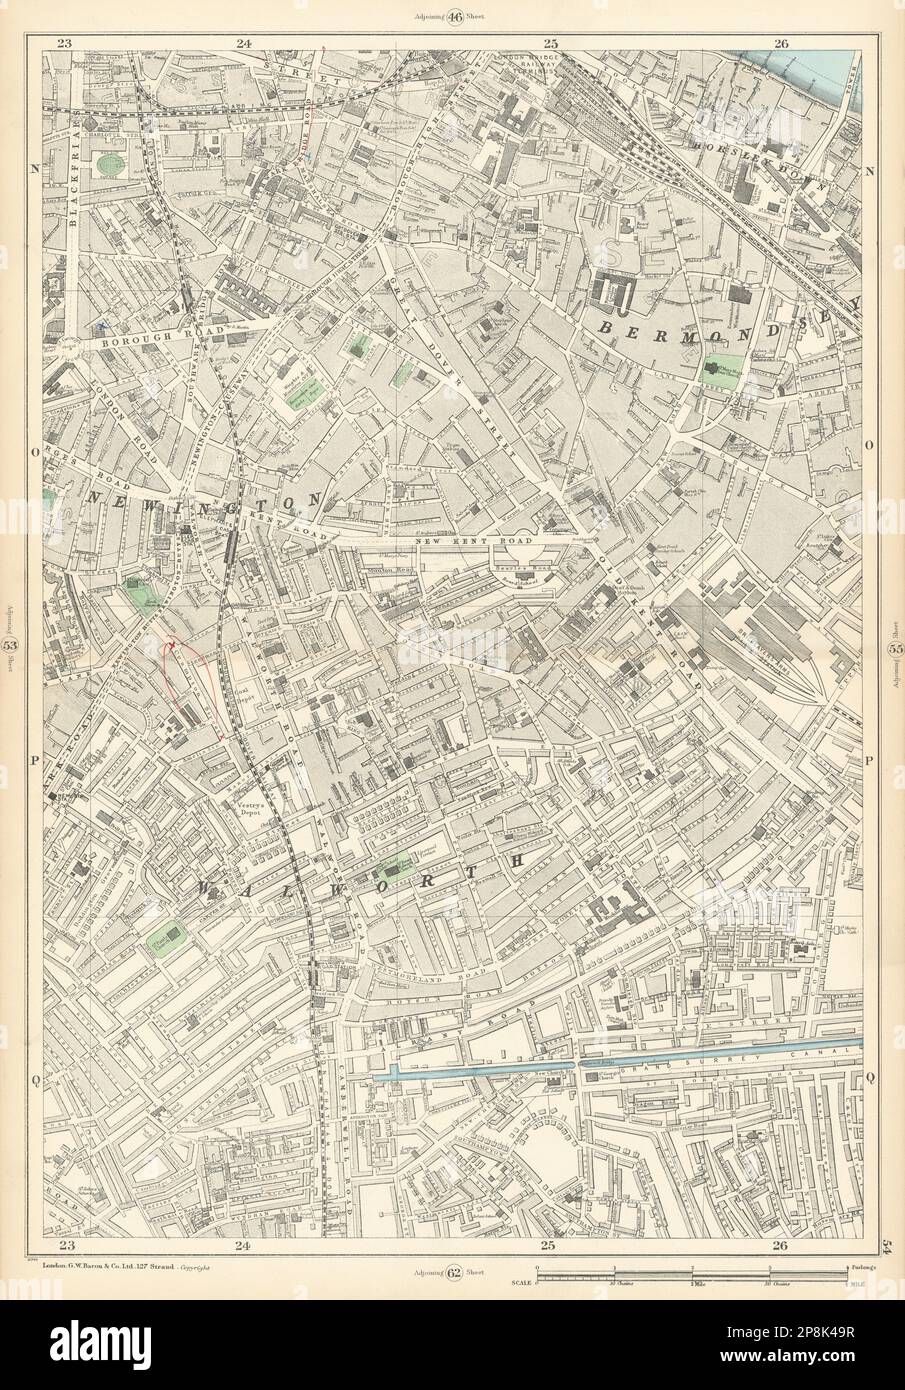 BERMONDSEY Newington Elephant & Castle Borough London Bridge Southwark 1900 map Stock Photo